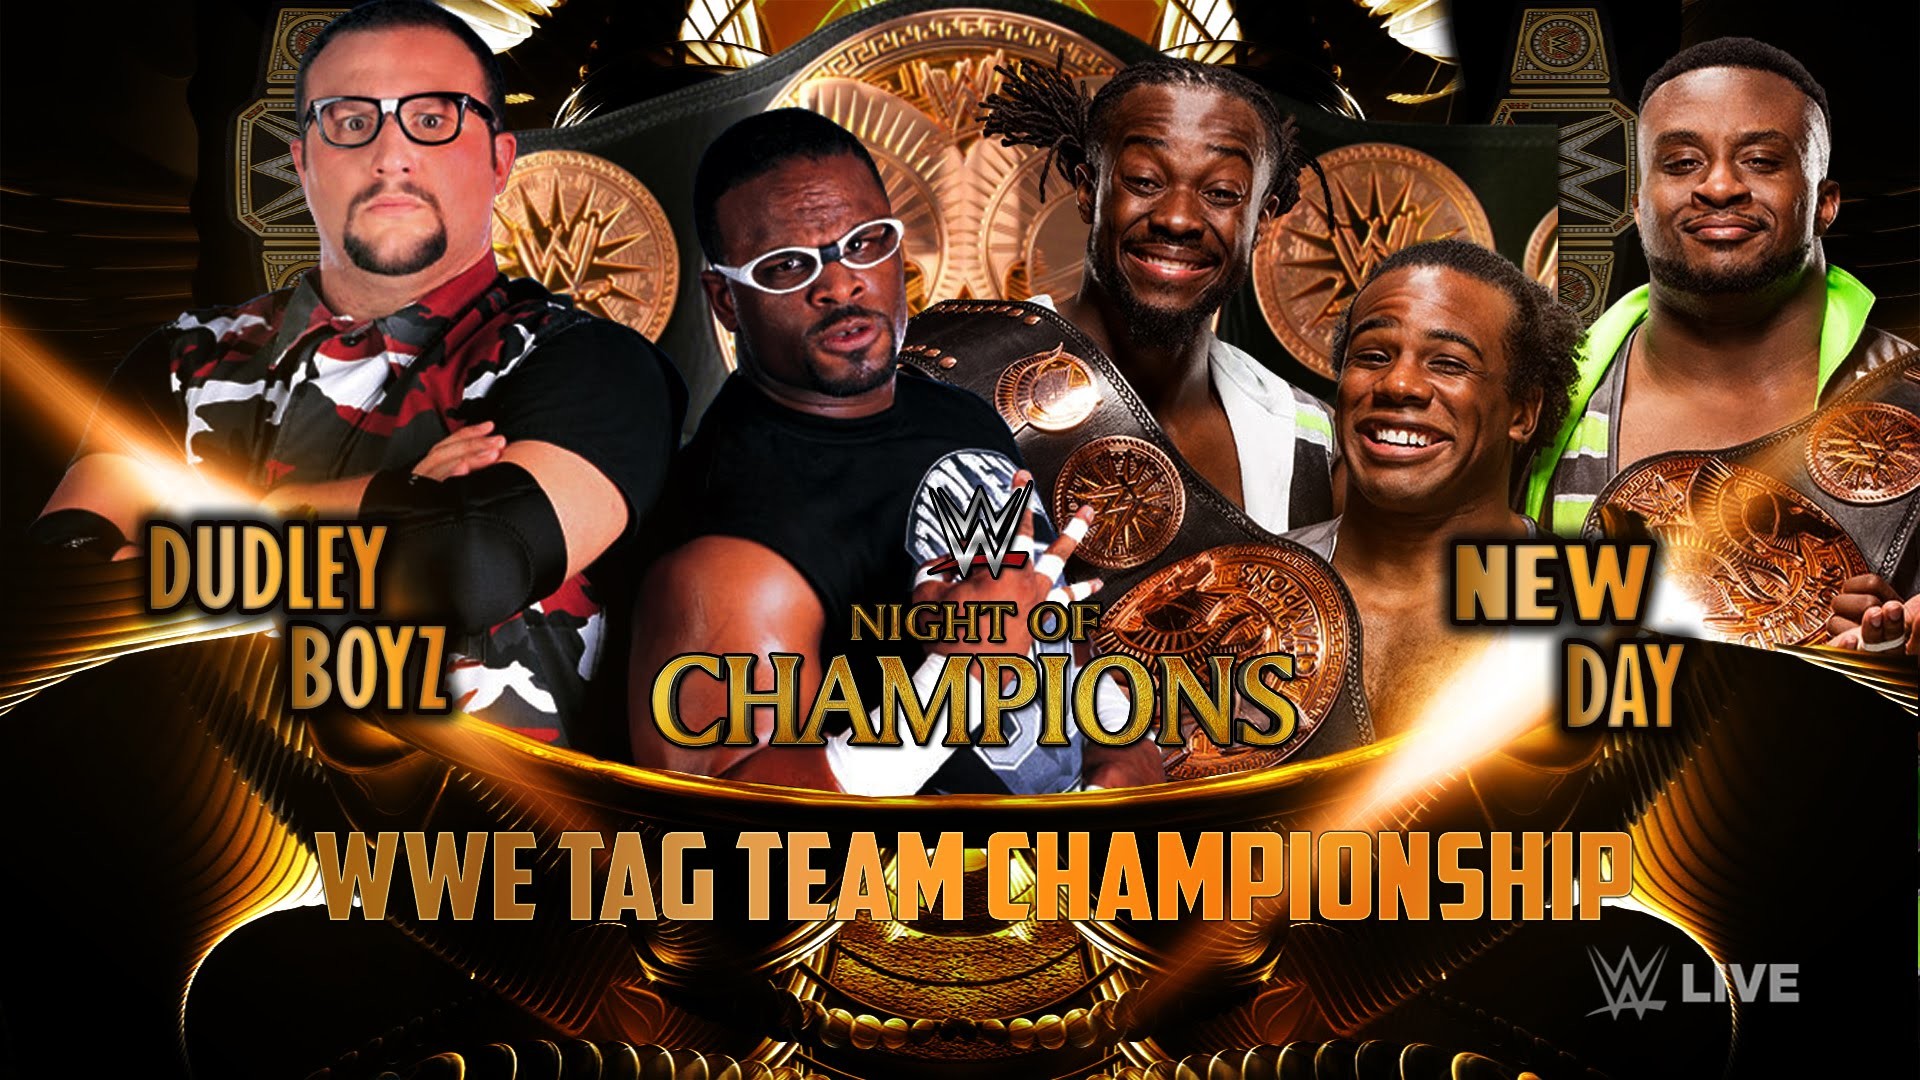 1920x1080 WWE Night Of Champions 2015 - Dudley Boyz Vs New Day (TagTeam Championship)  Match HD